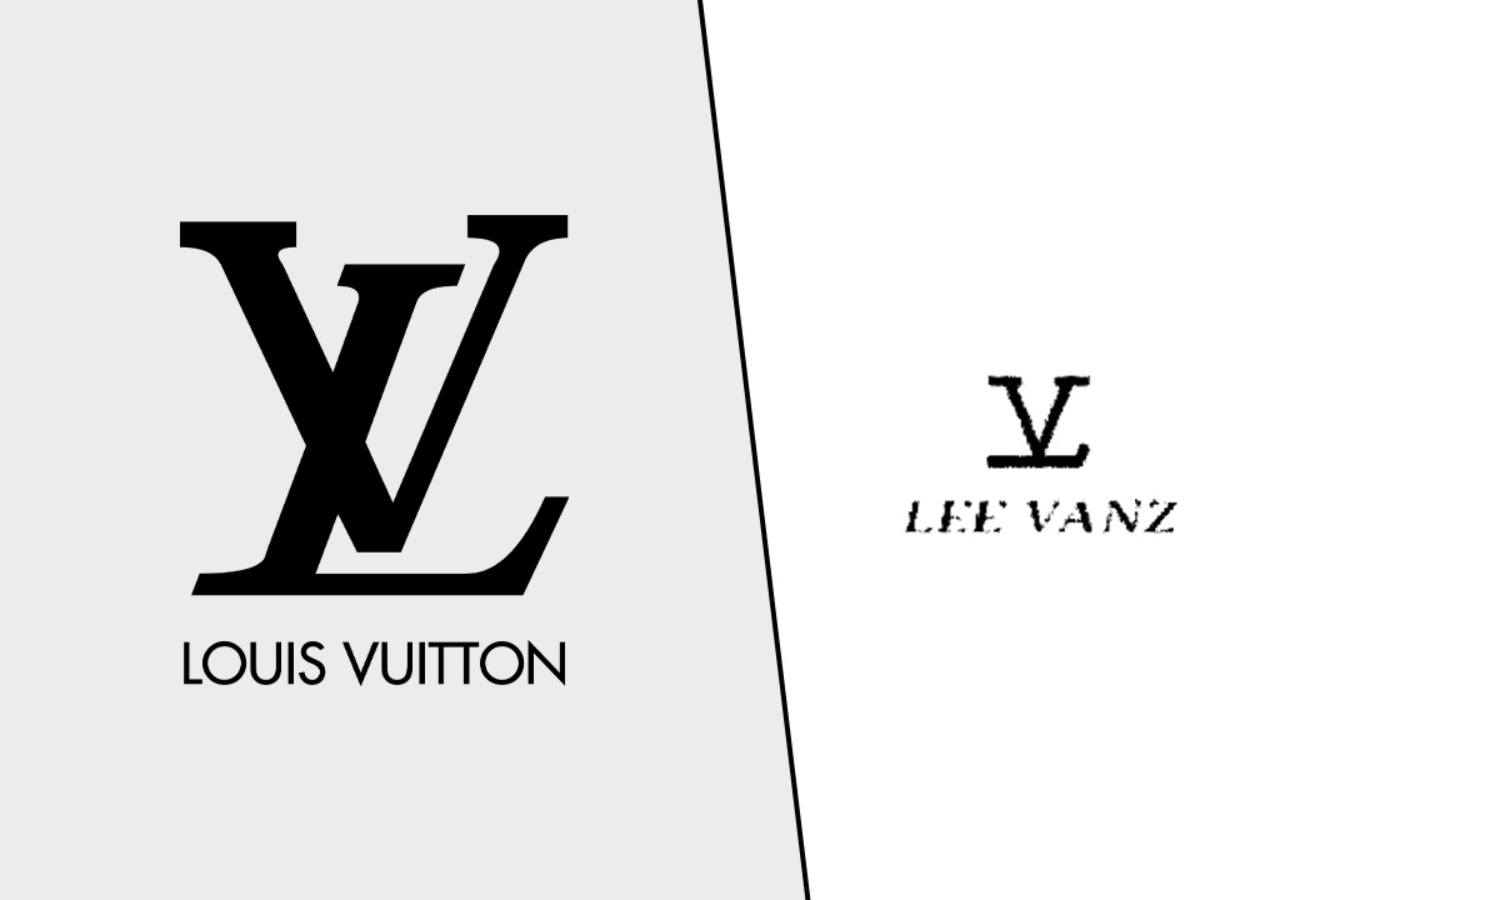 Zevs 'Liquidated Louis Vuitton' Print Release Details